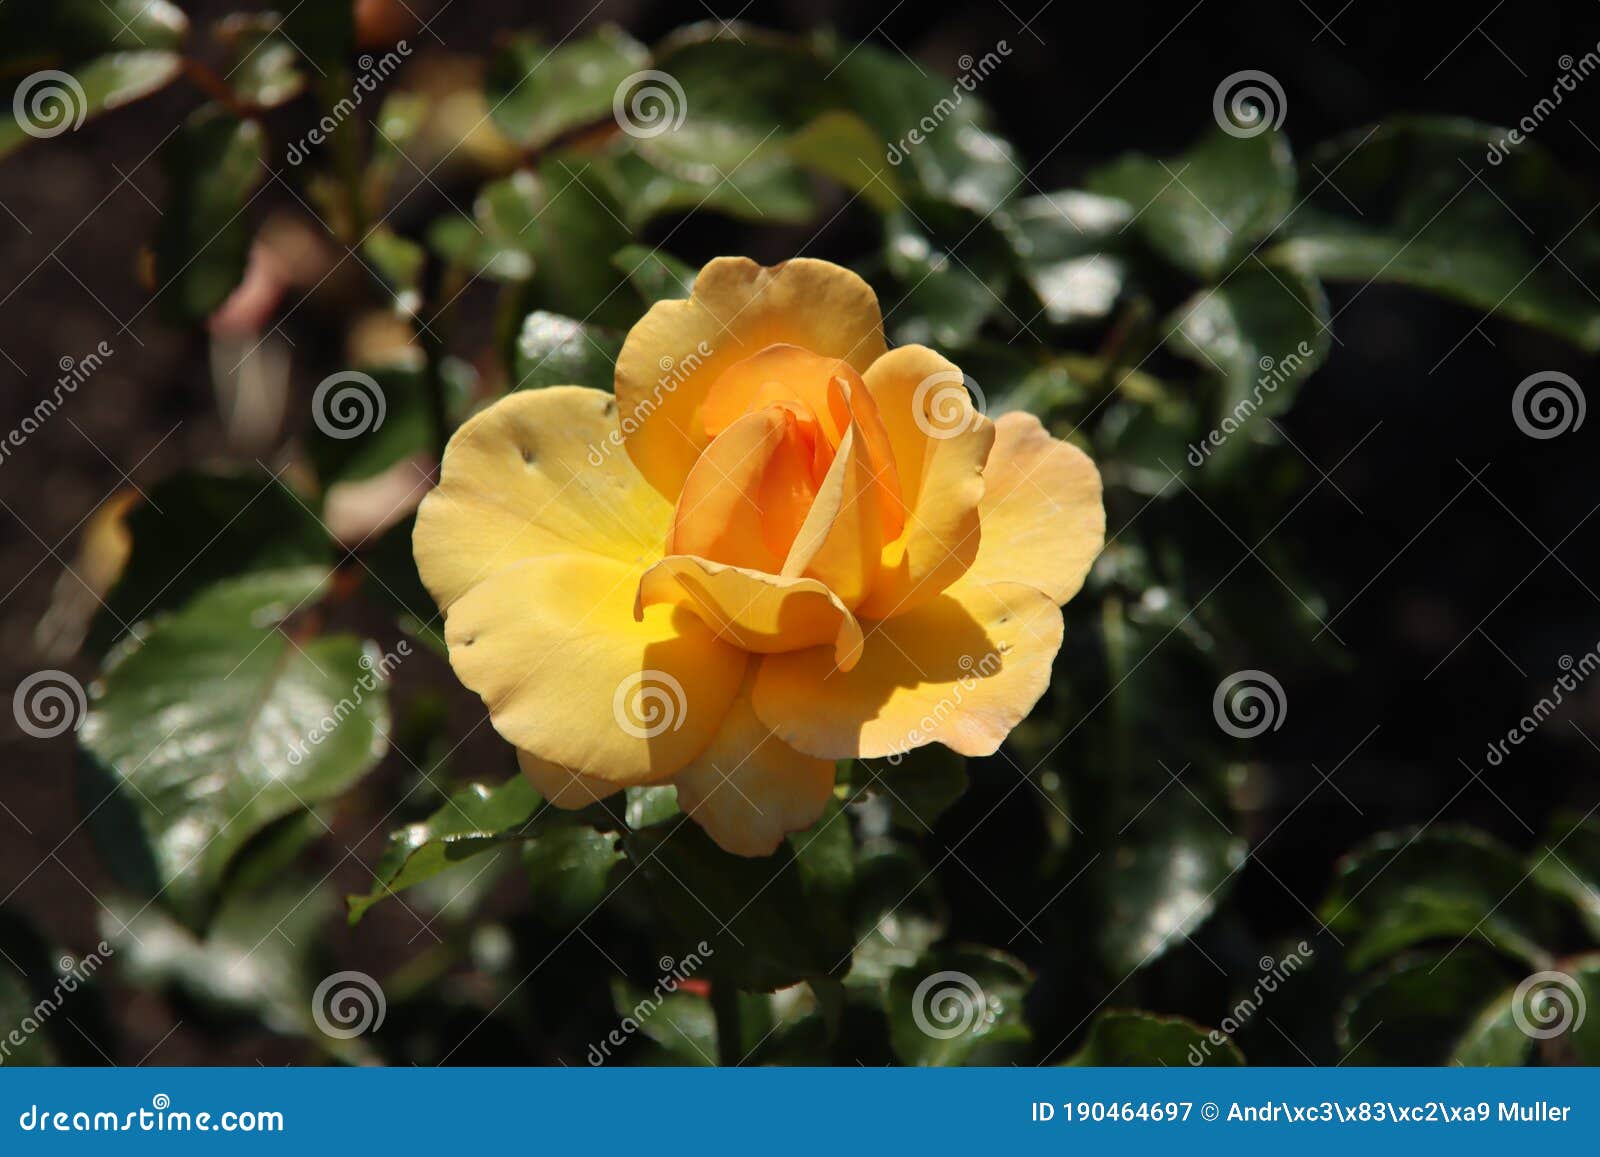 rose in the flora rosarium in the village of boskoop,netherlands